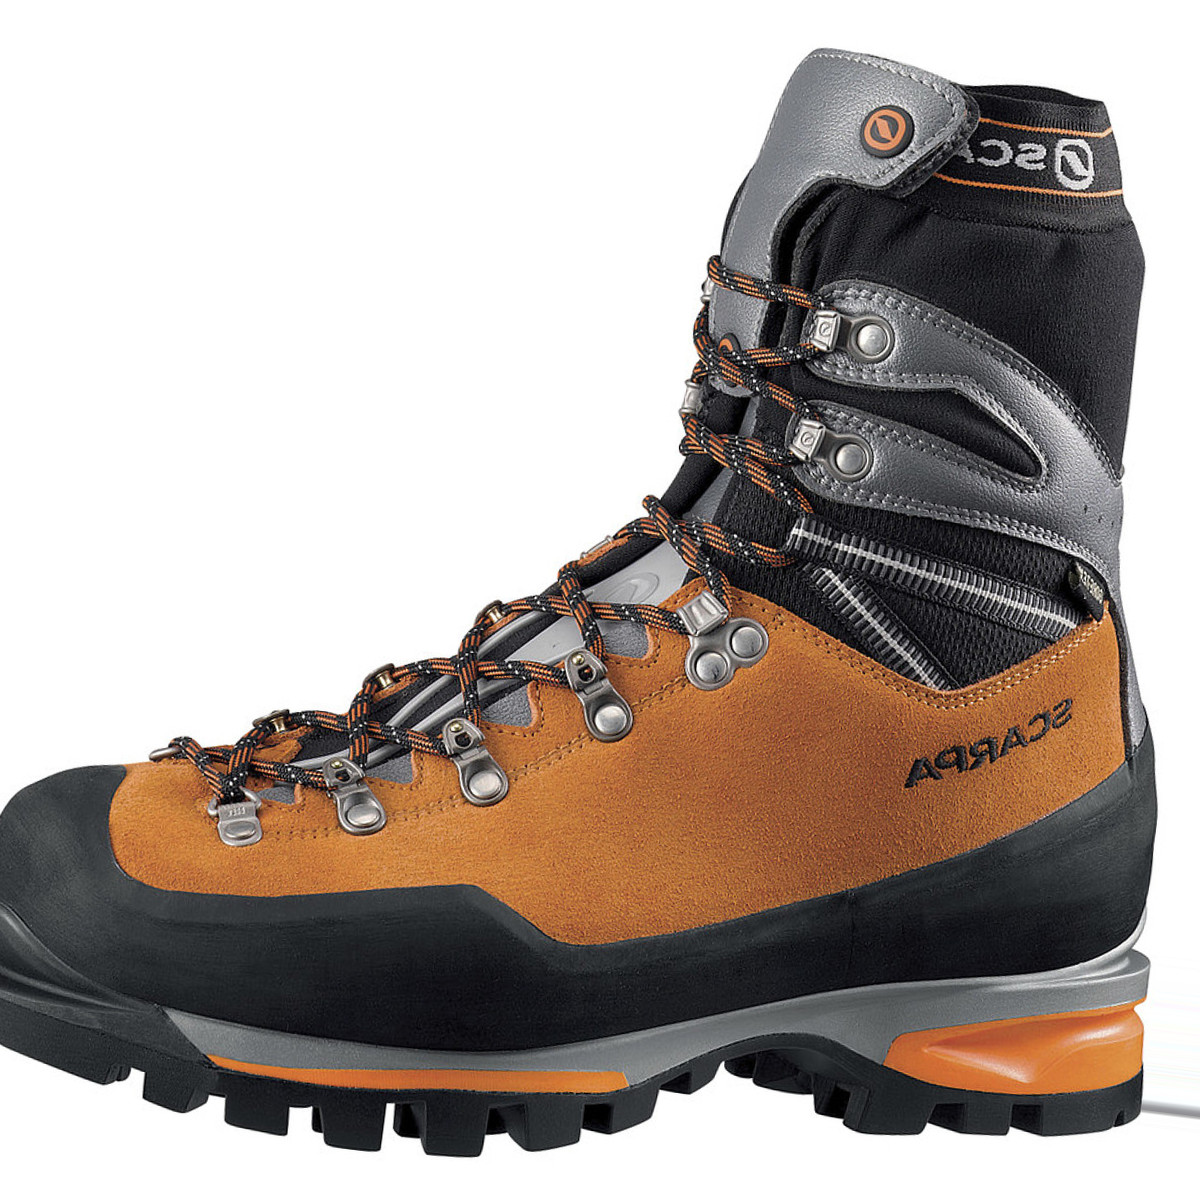 Scarpa Mont Blanc Pro GTX Mountaineering Boot - Men's